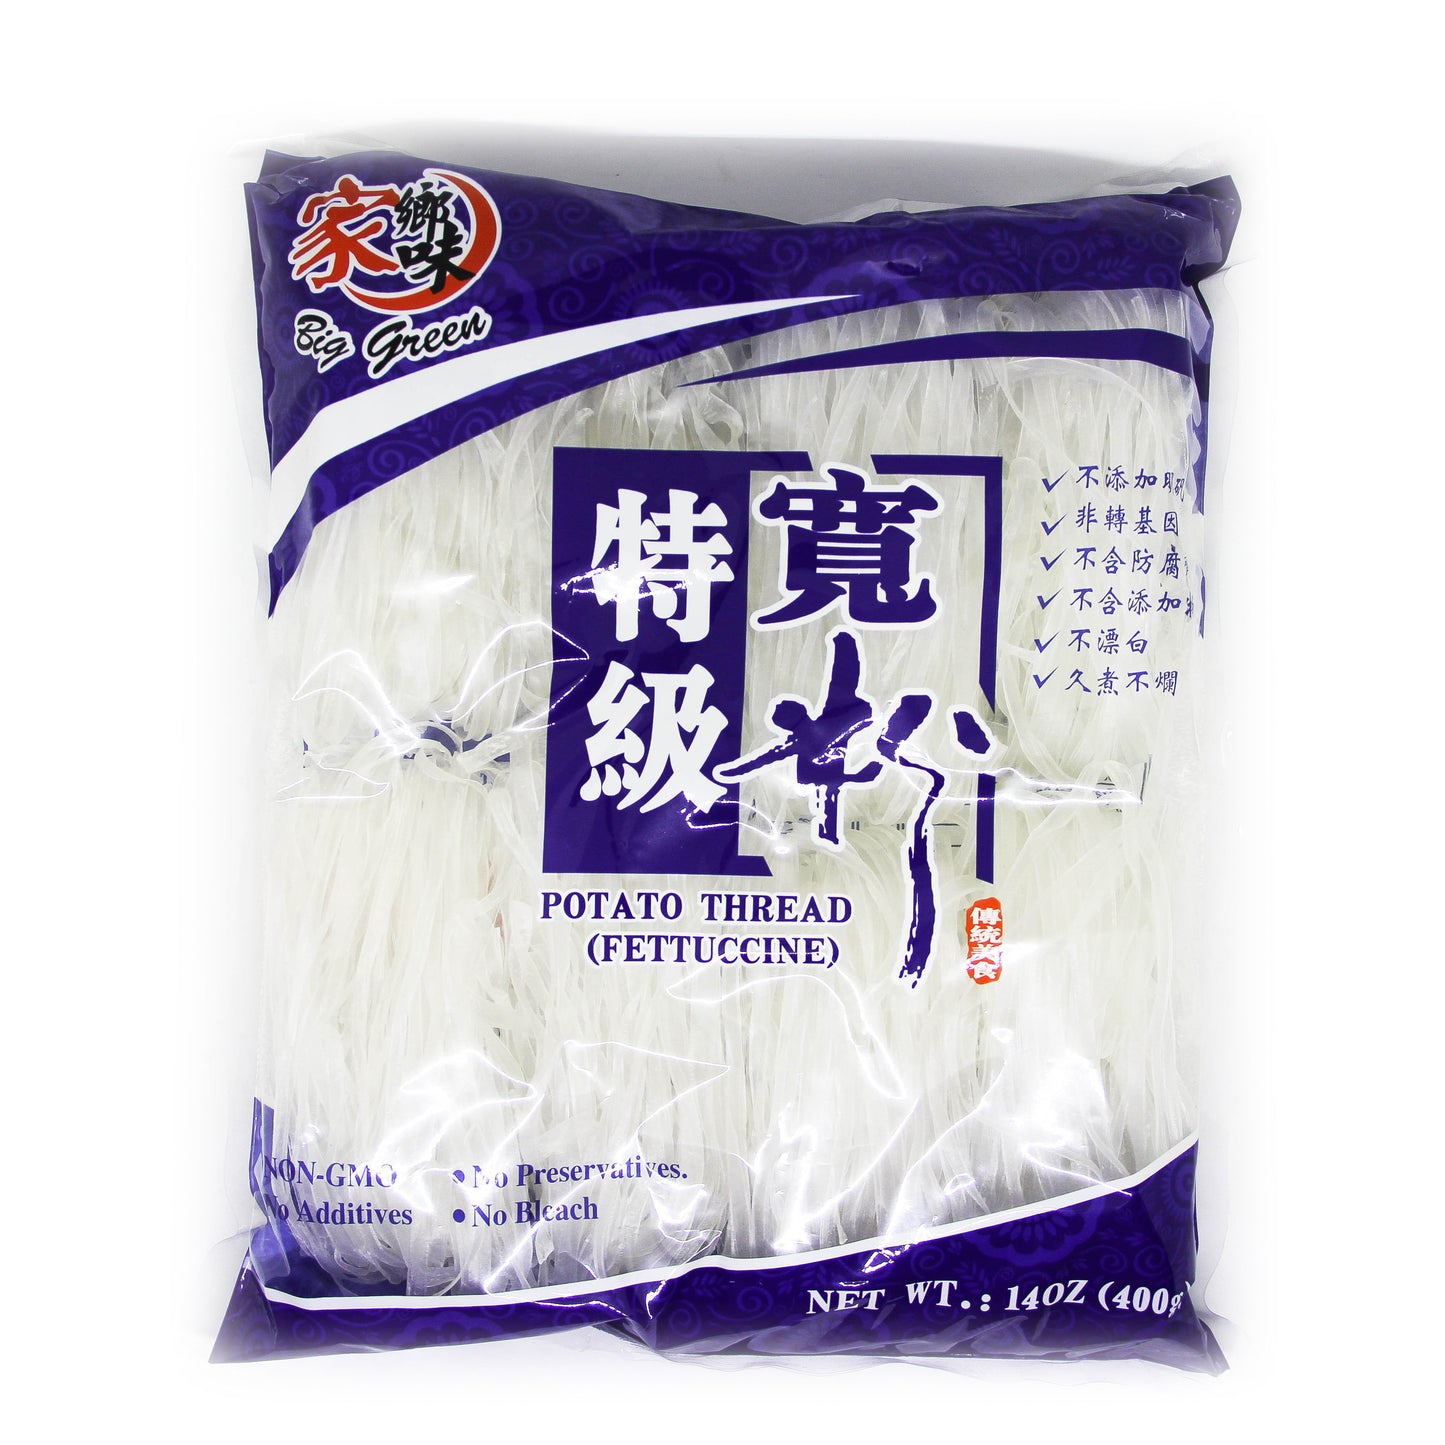 Potato Thread (Fettuccine) 家鄉味 特級寬粉